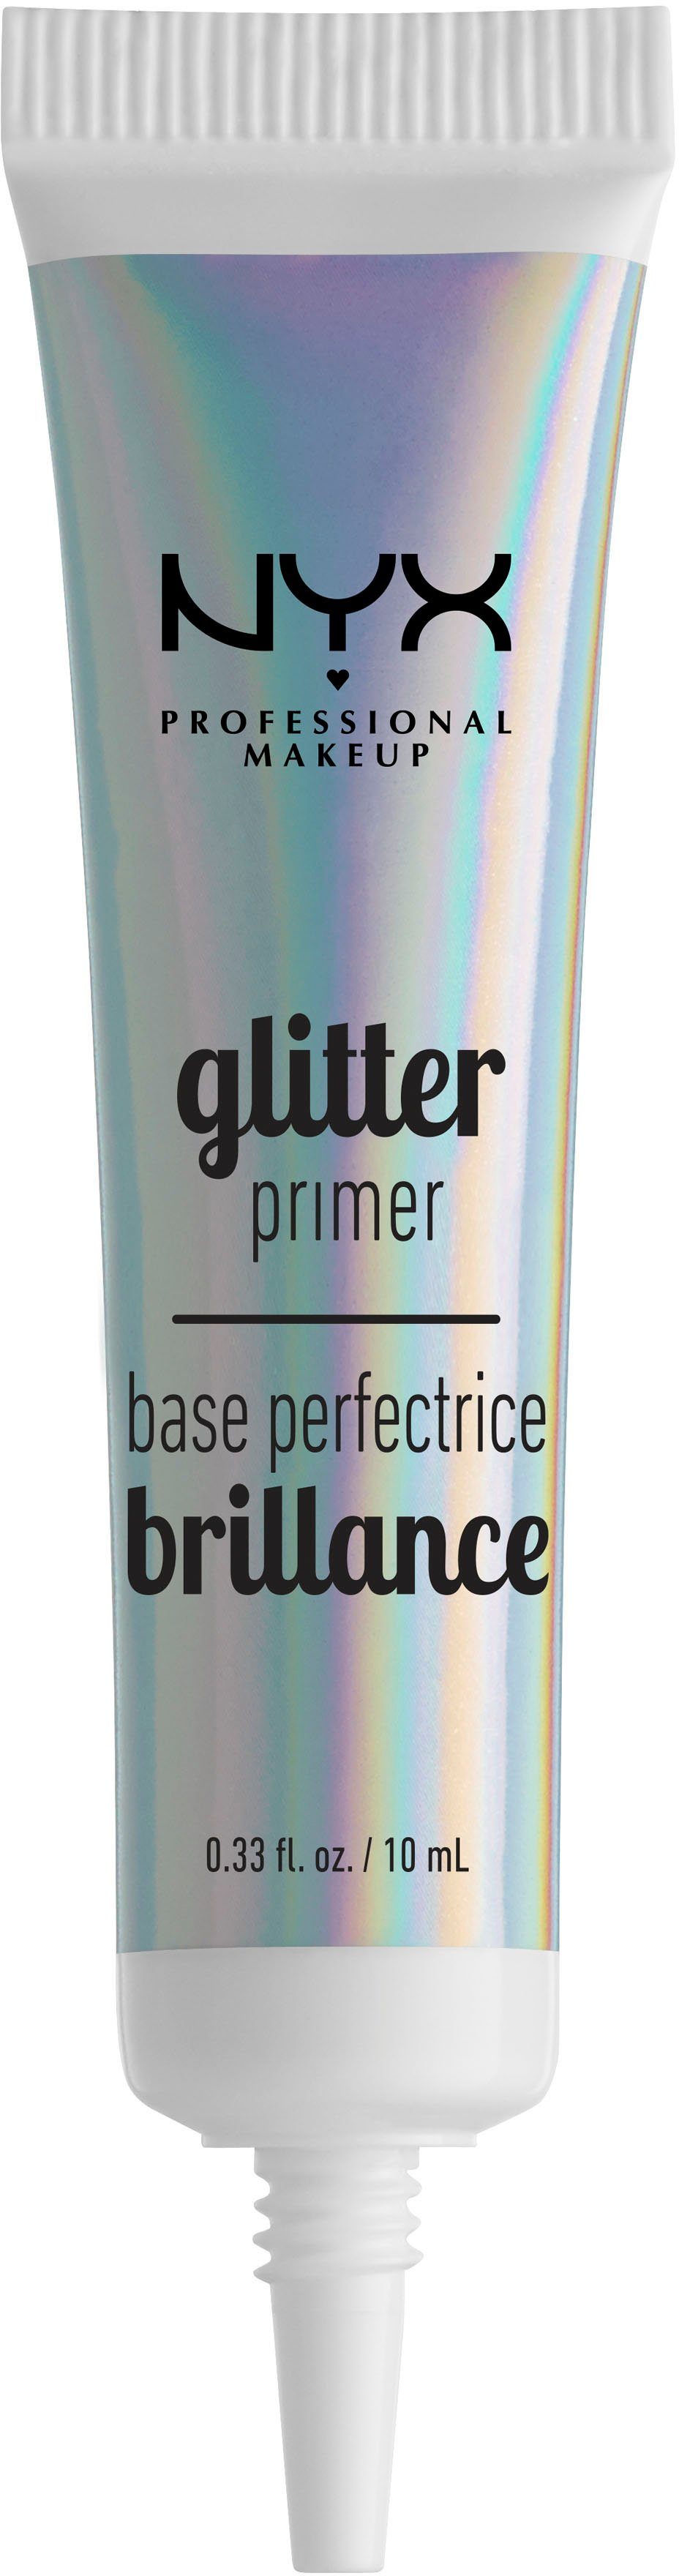 NYX Glitter Primer Professional Makeup NYX Primer